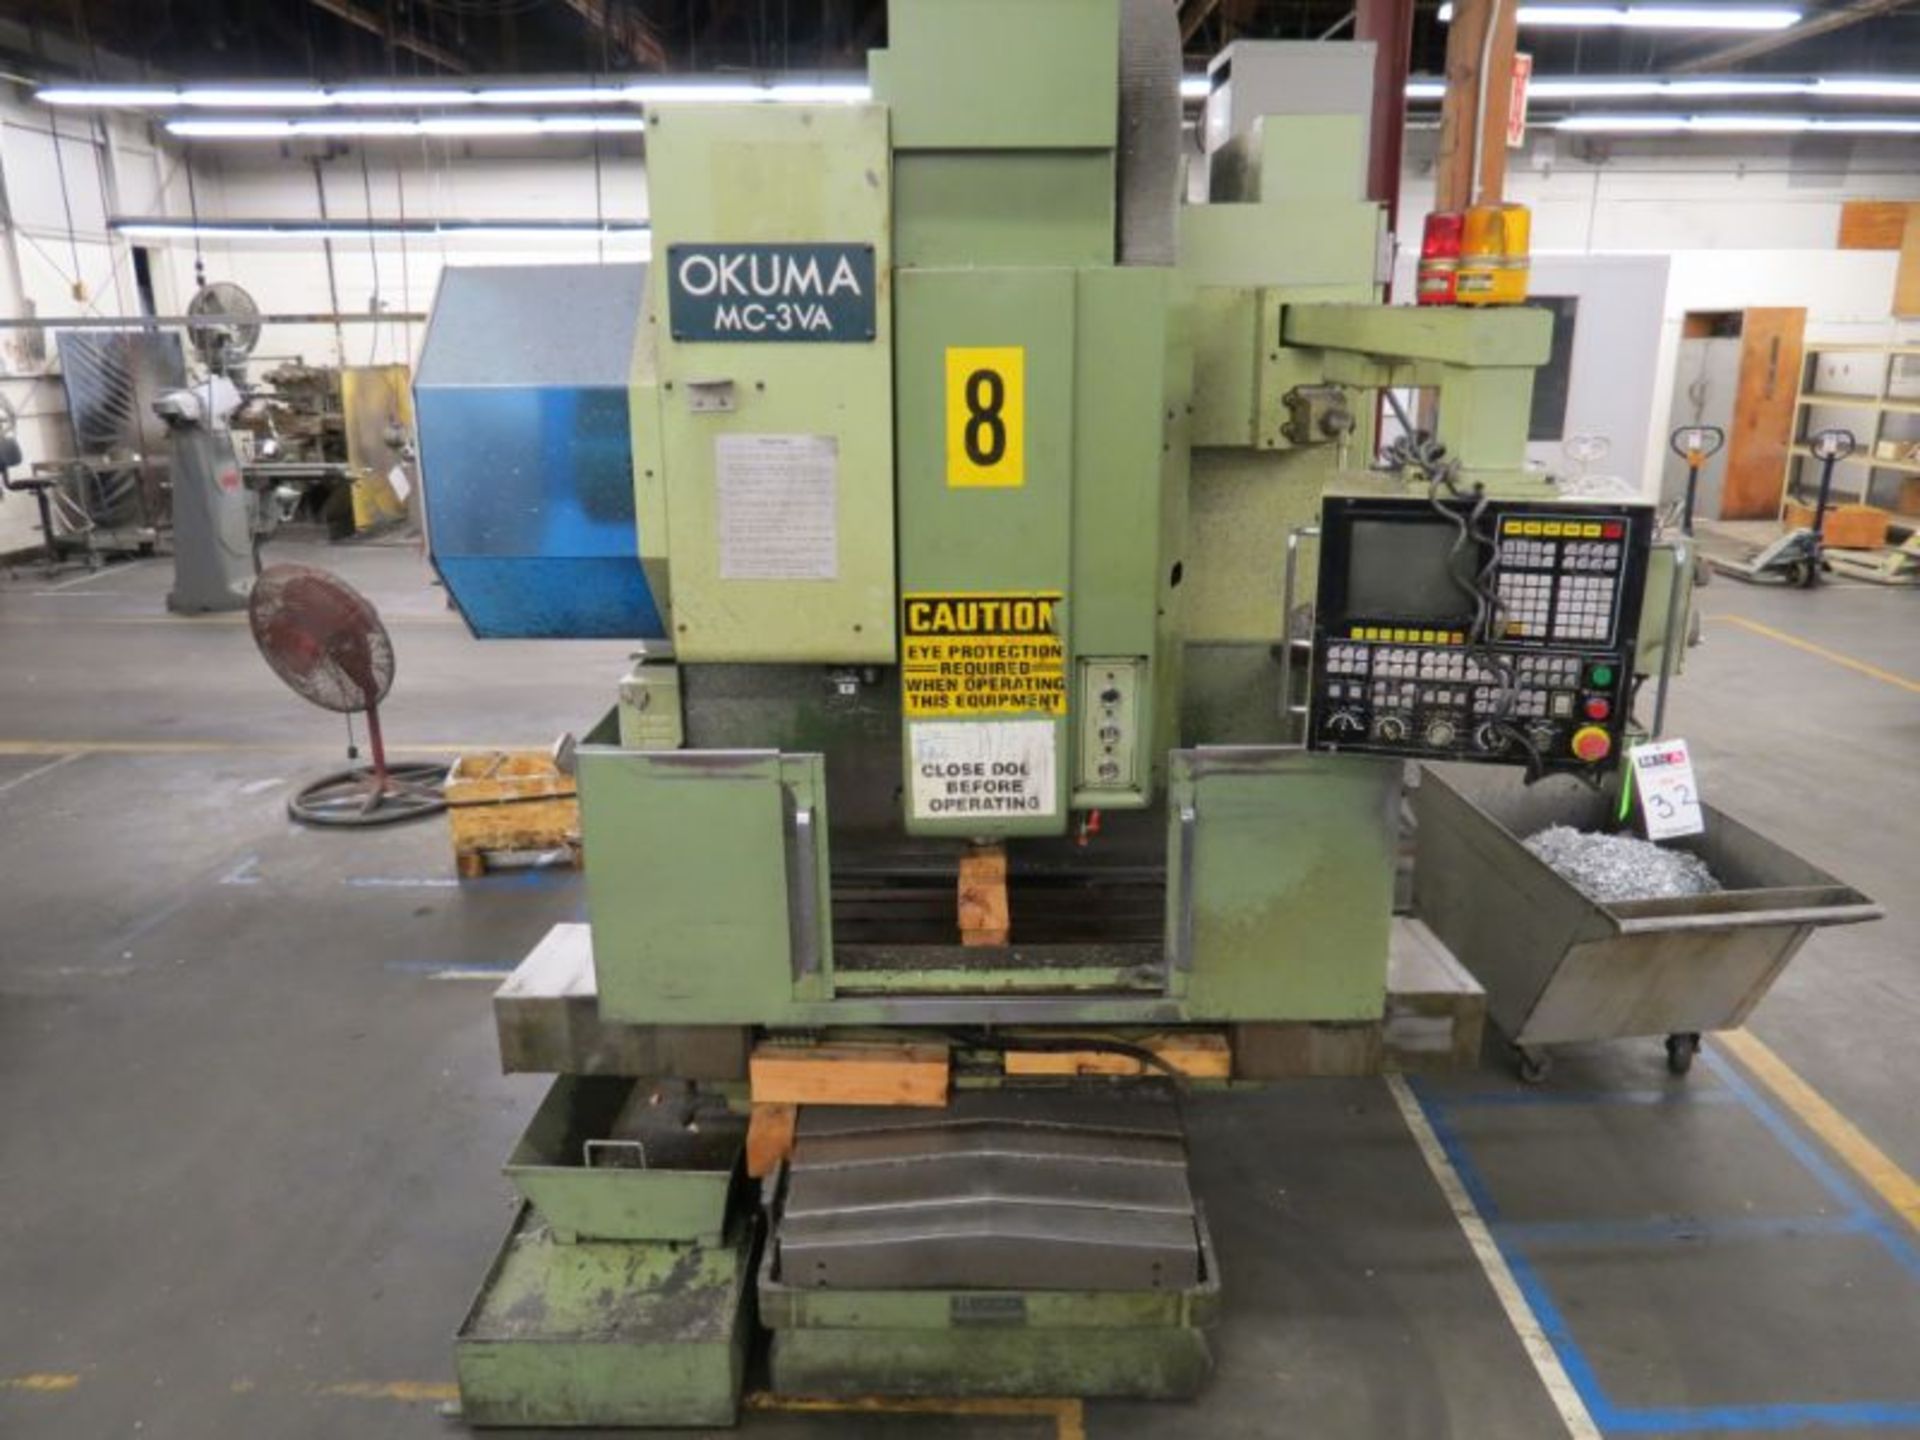 Okuma MC-3 VA Vertical CNC Milling Machine, s/n 68 (Not Under Power)